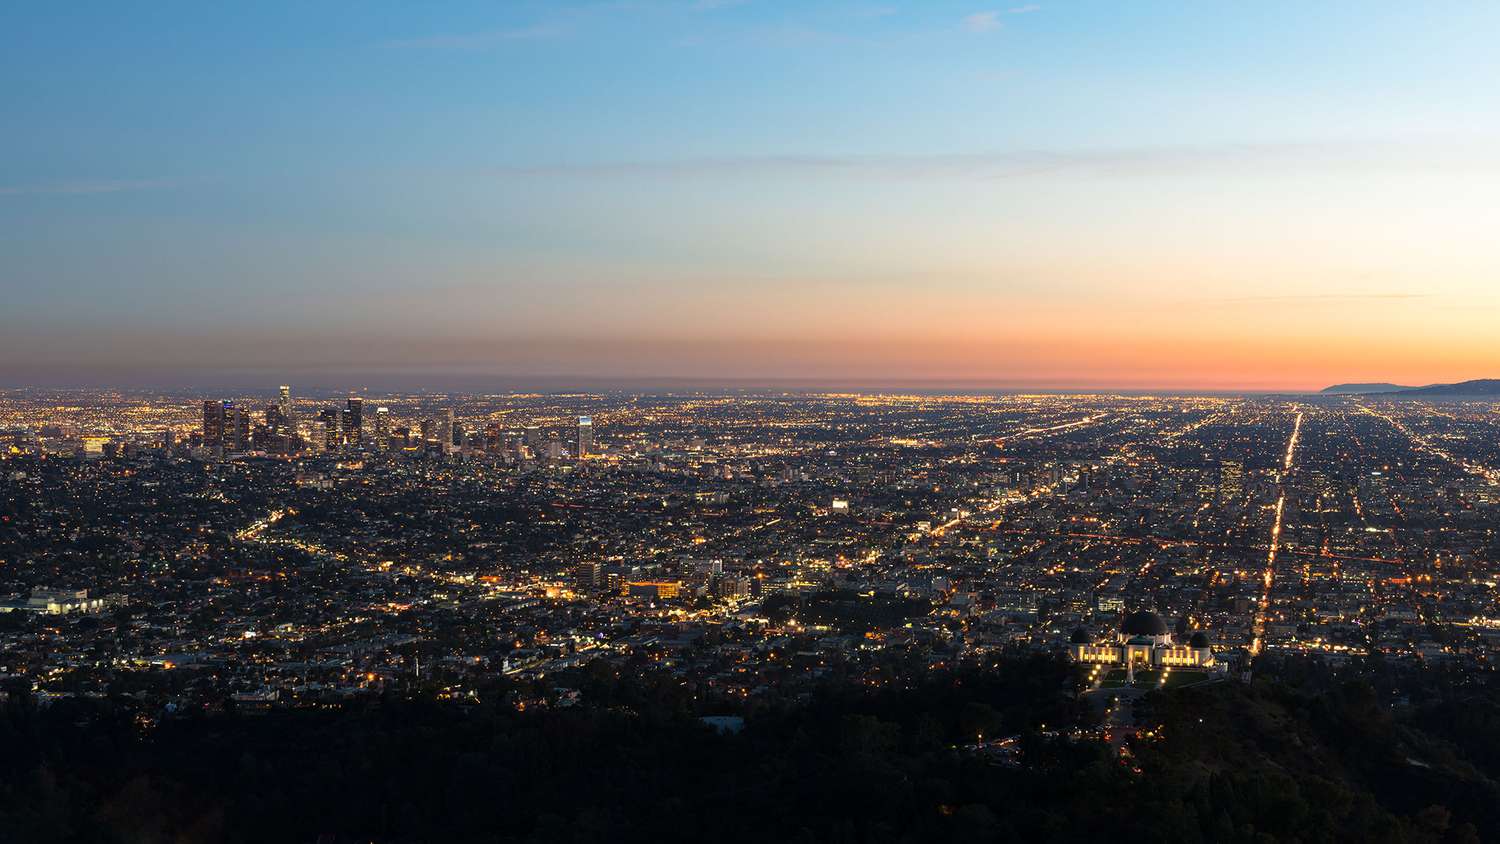 USA, California, Los Angeles, Illuminated cityscape at sunrise